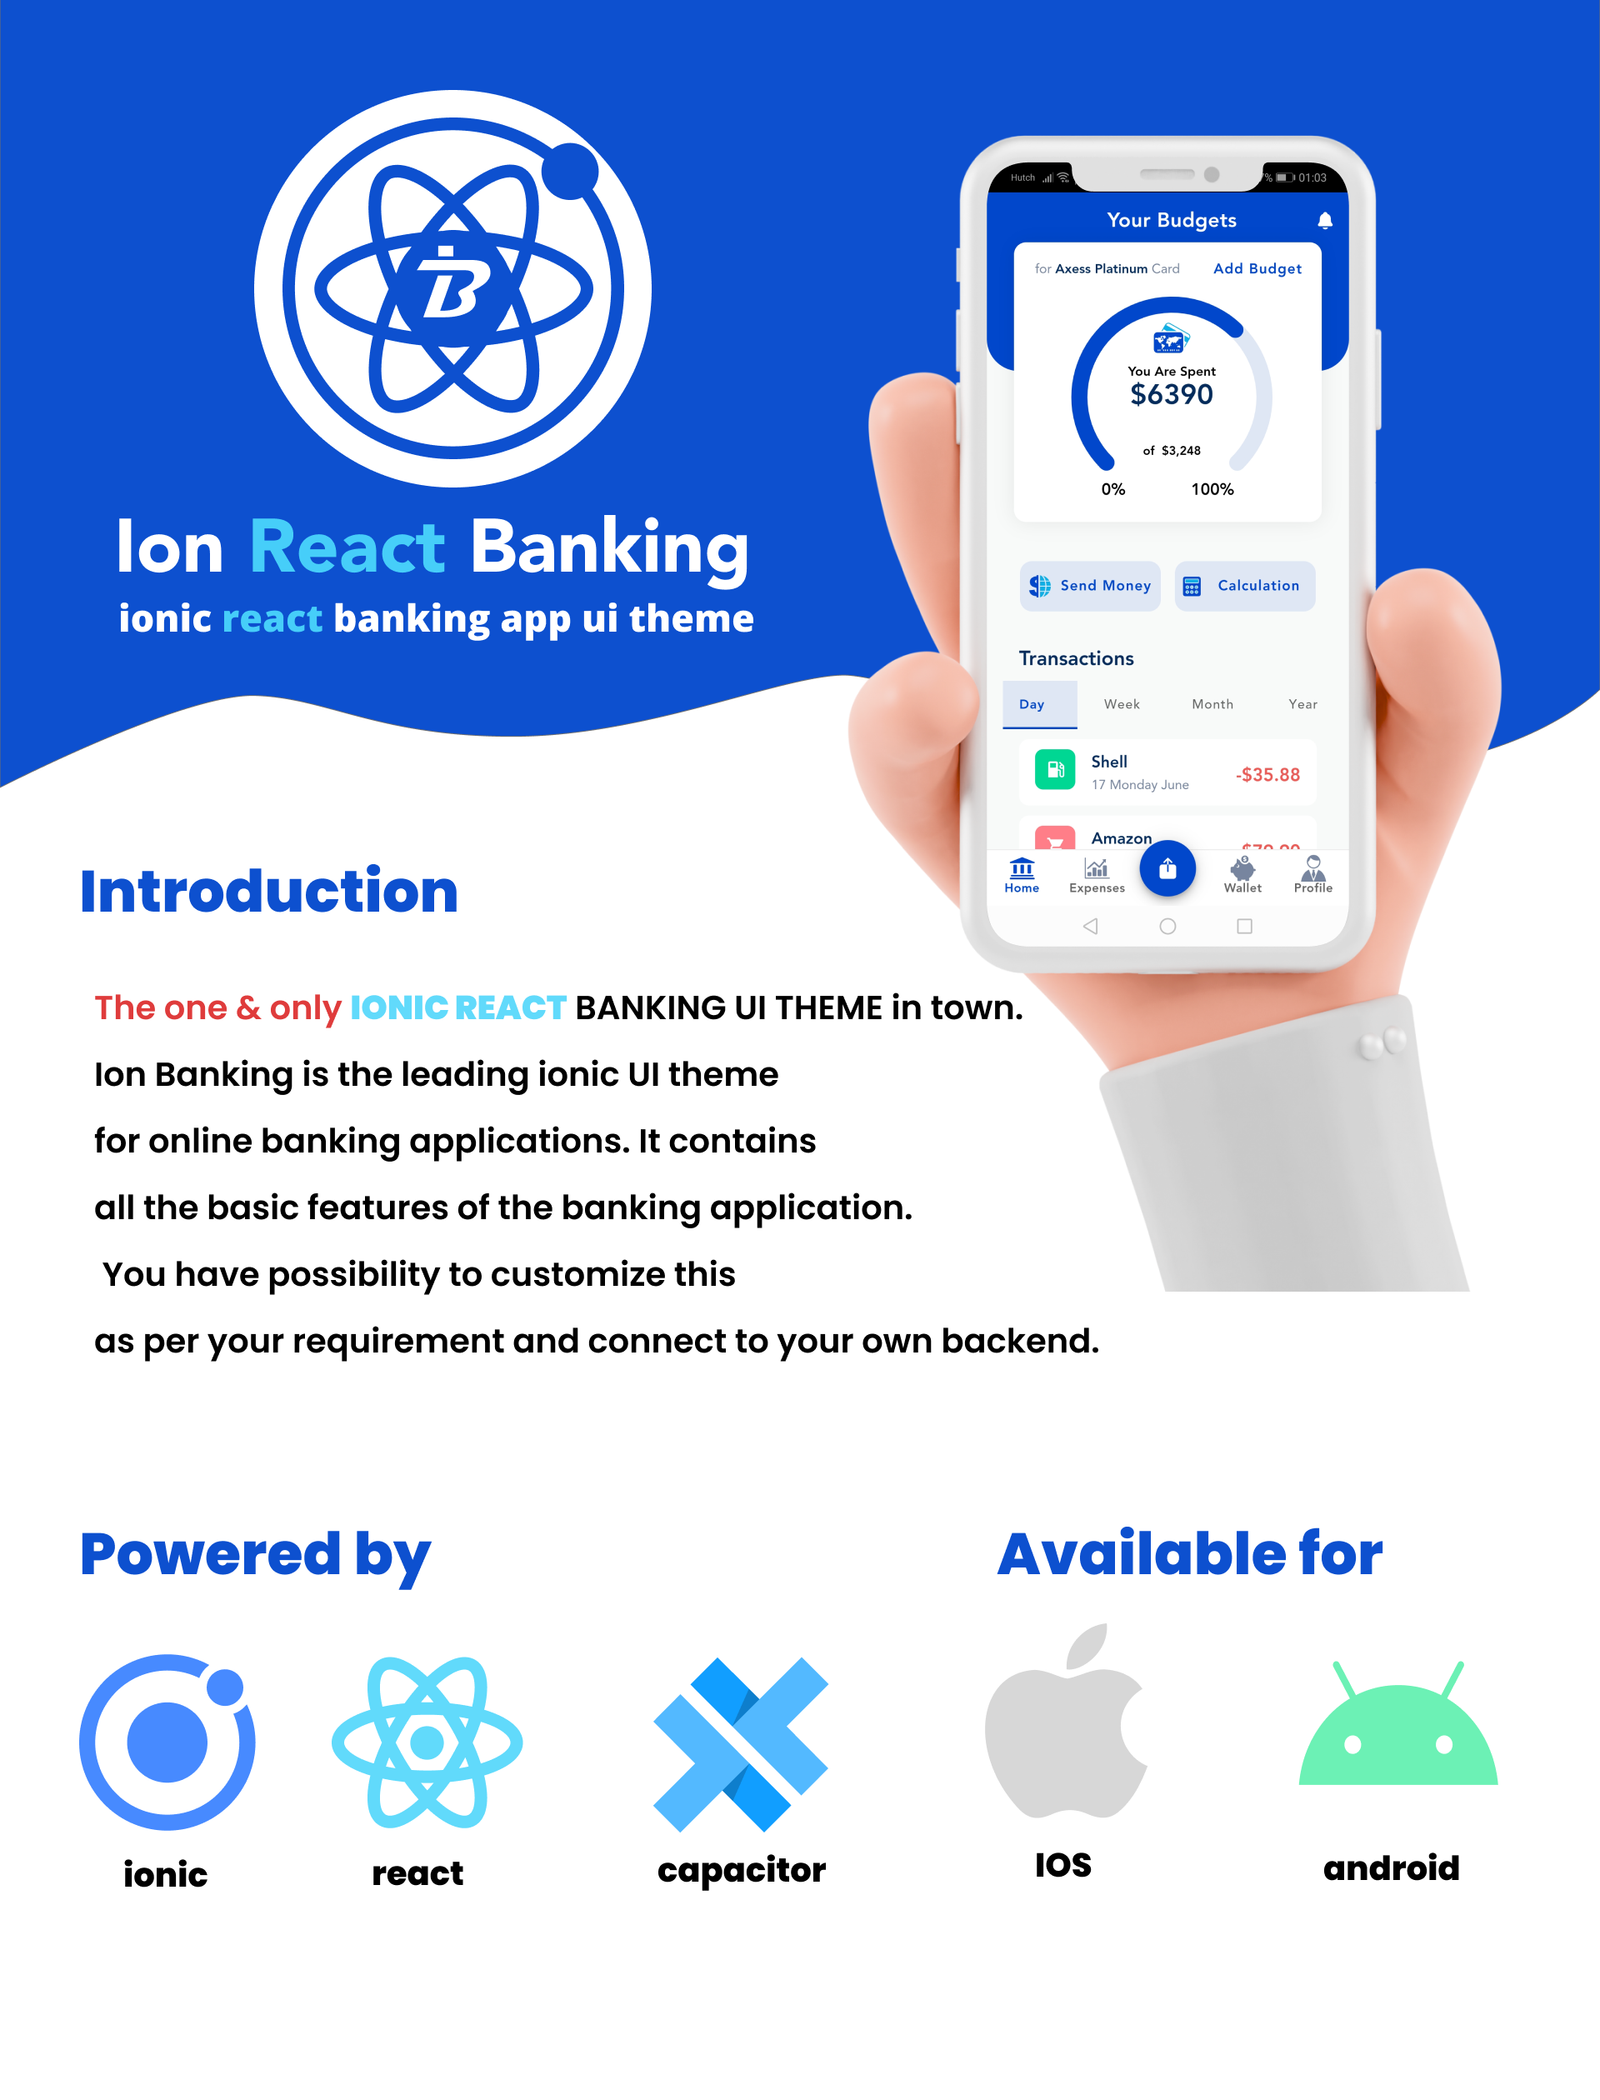 Ion React Banking - ionic react banking app ui theme | Ionic 6 | Capacitor 3 - 1